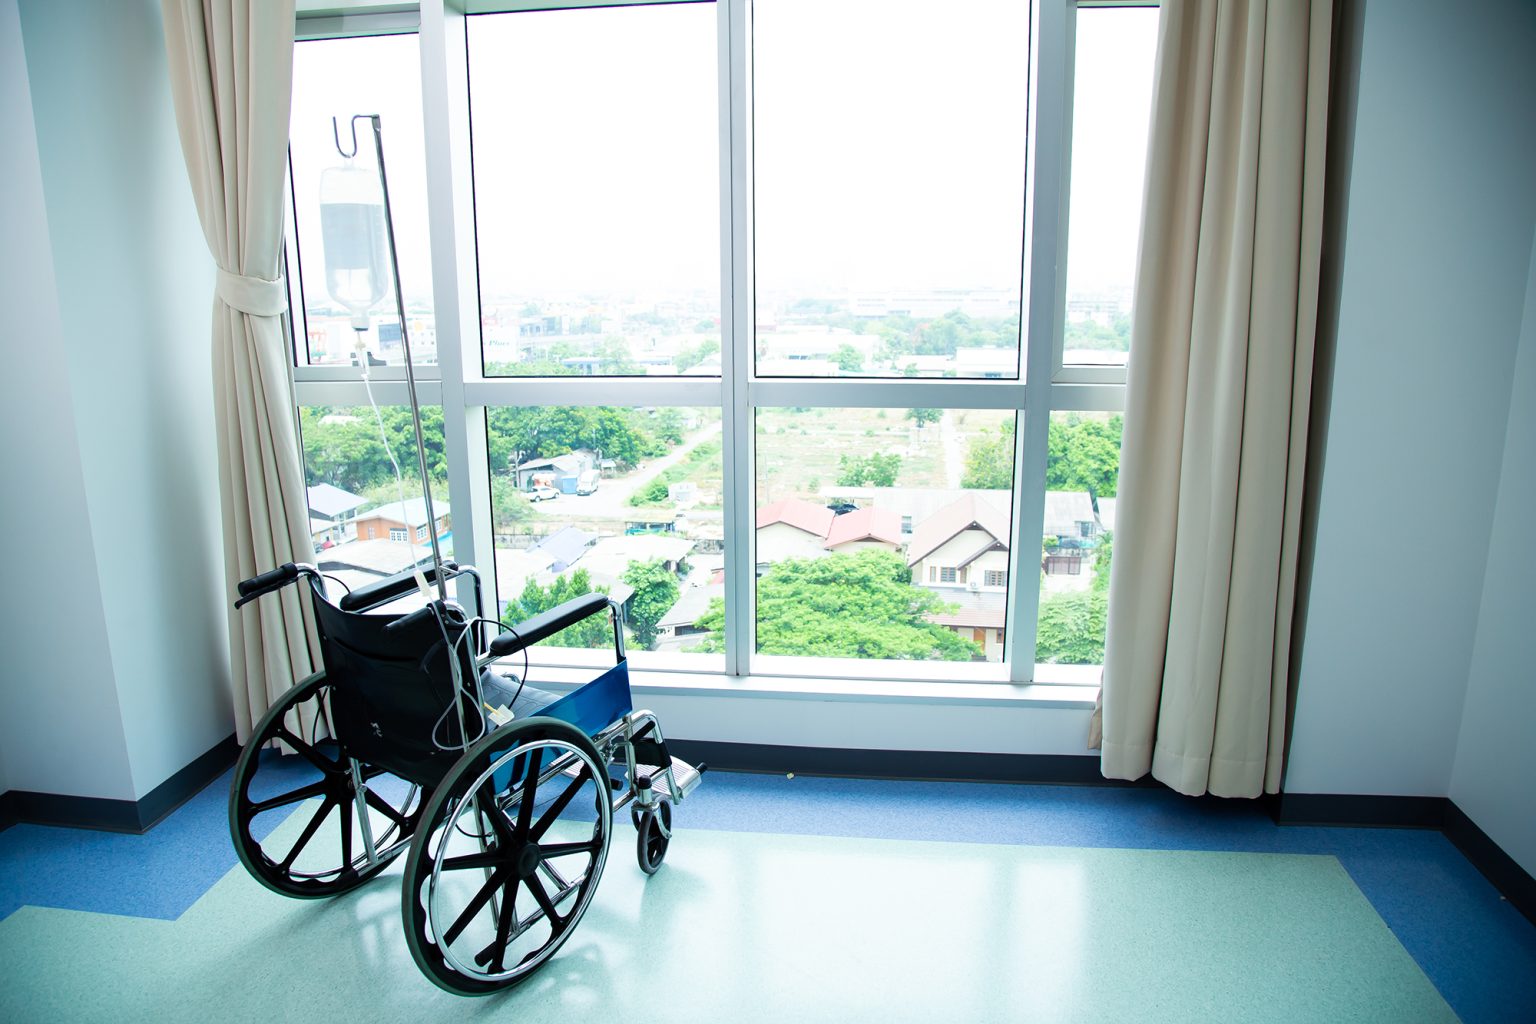 Empty wheelchair stand near window at hospital